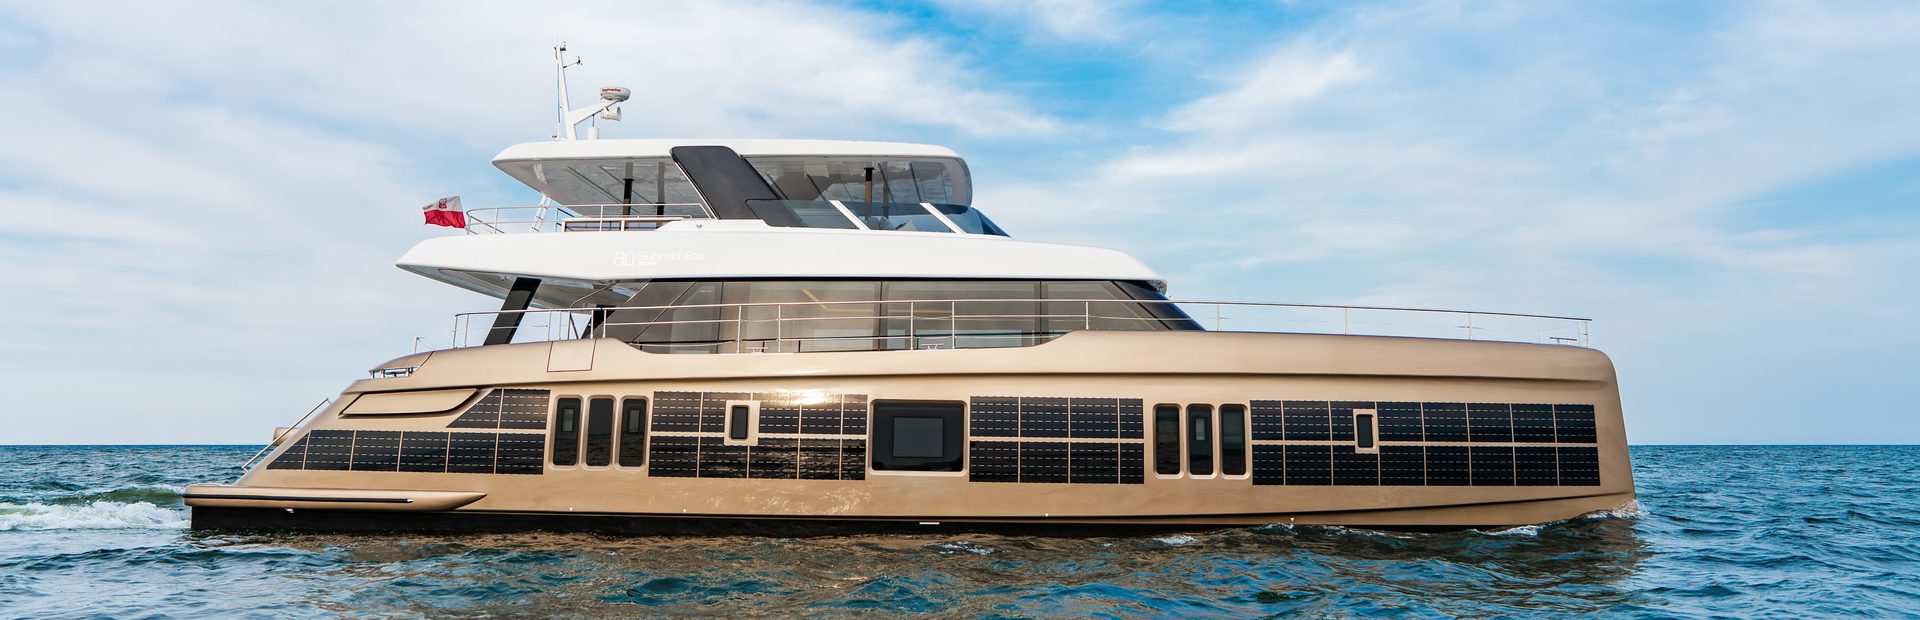 80 Sunreef Power Eco Yacht